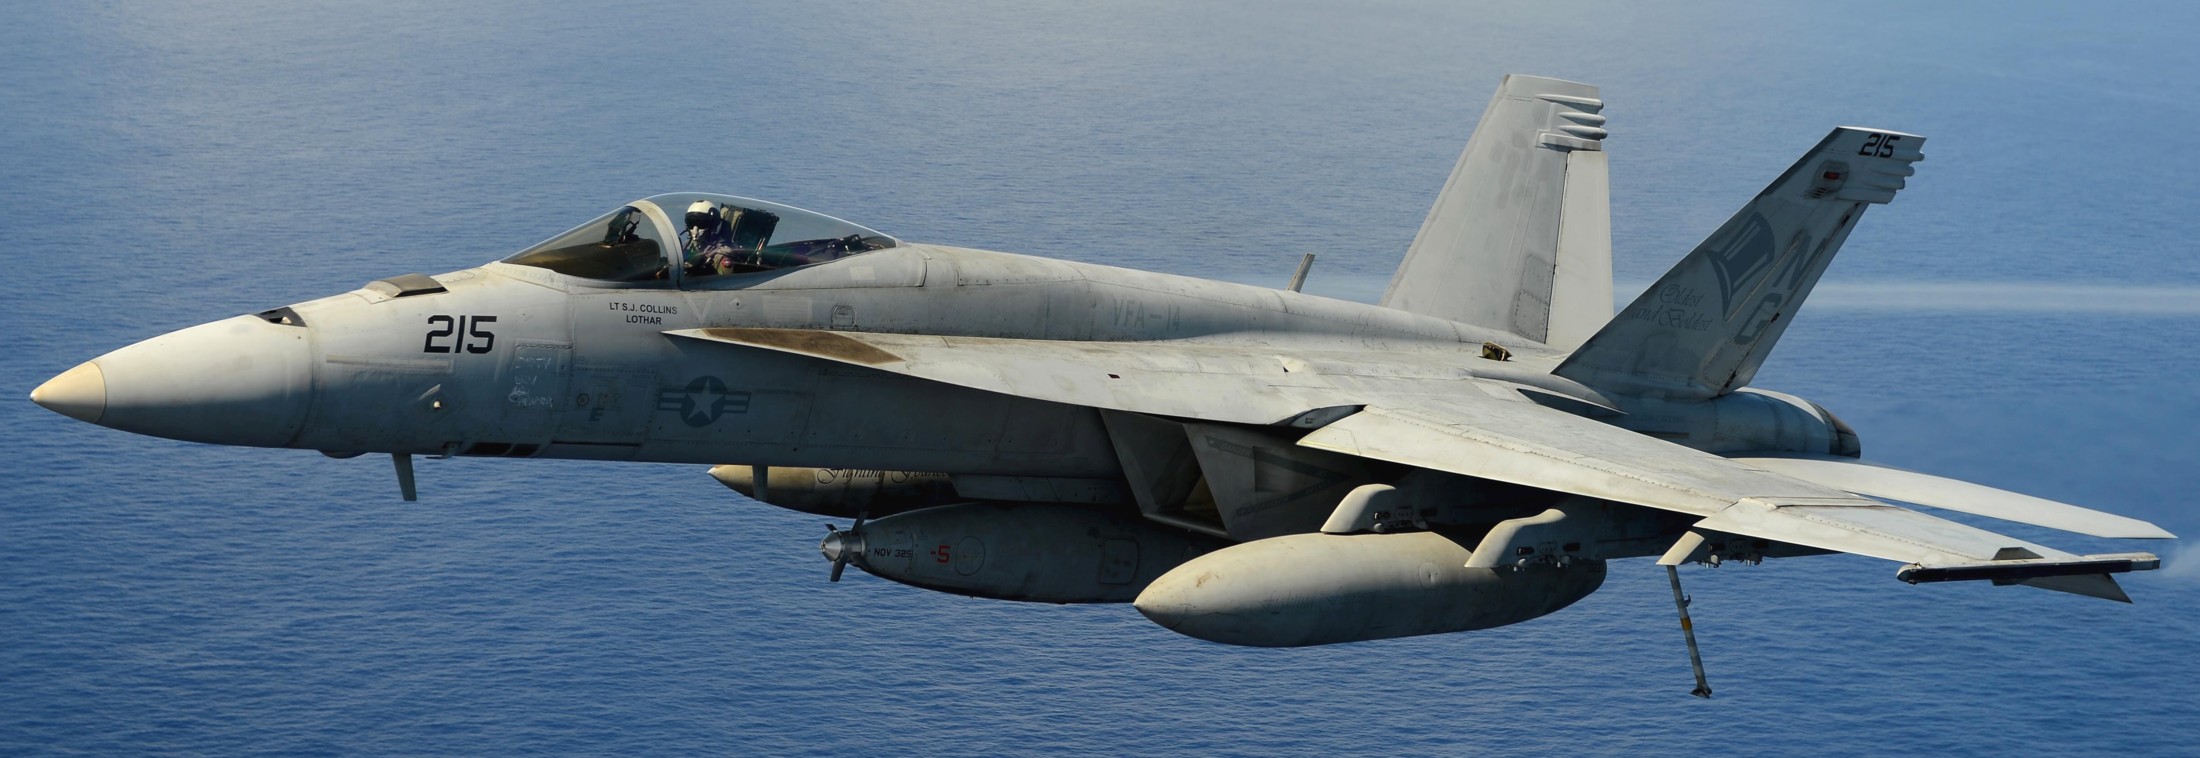 vfa-14 tophatters strike fighter squadron f/a-18e super hornet cvn-74 uss john c. stennis cvw-9 us navy 16